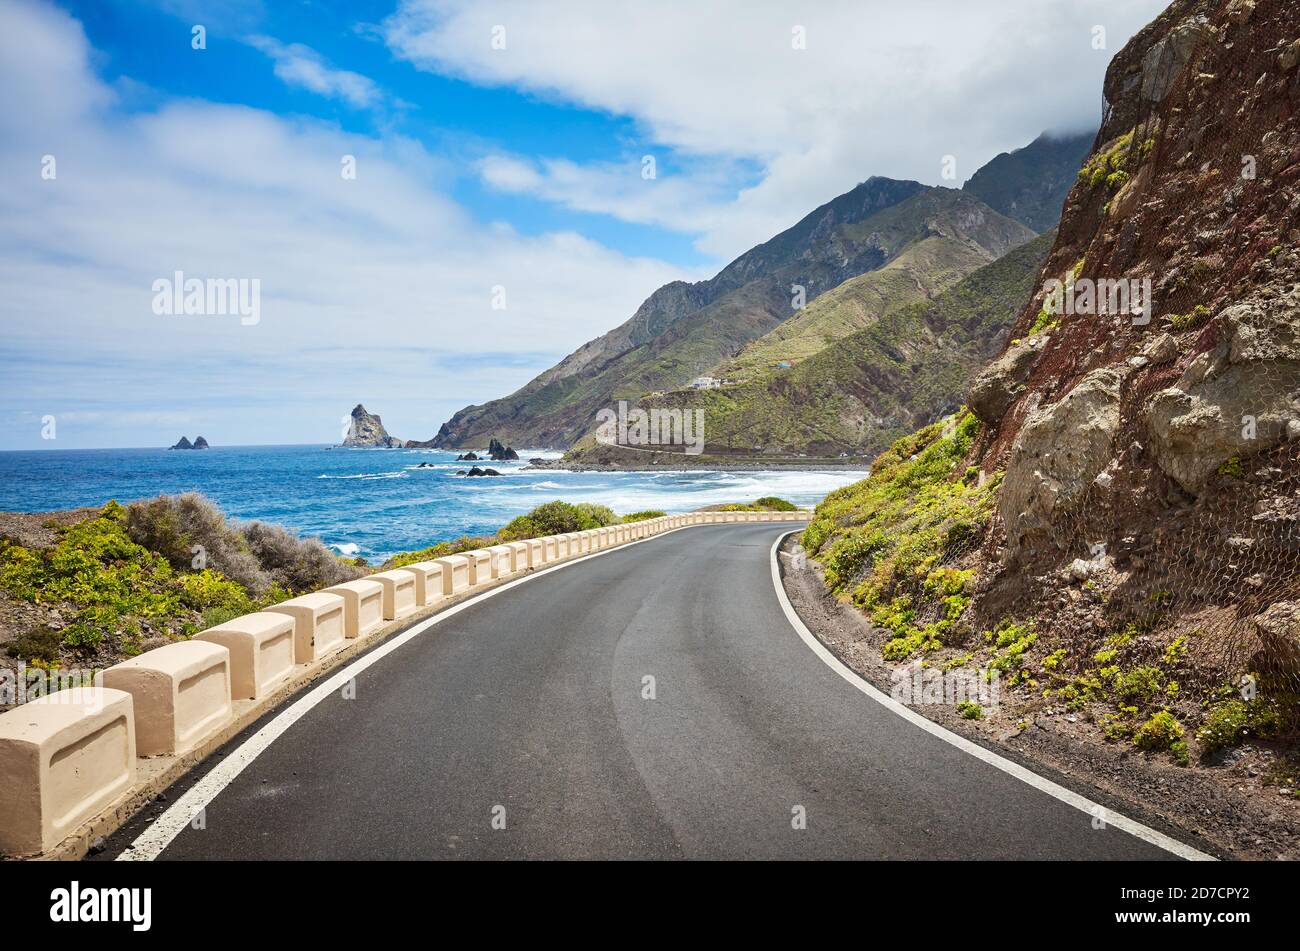 Scenic ocean road at the Macizo de Anaga mountain range, Atlantic Ocean coast of Tenerife, Spain. Stock Photo